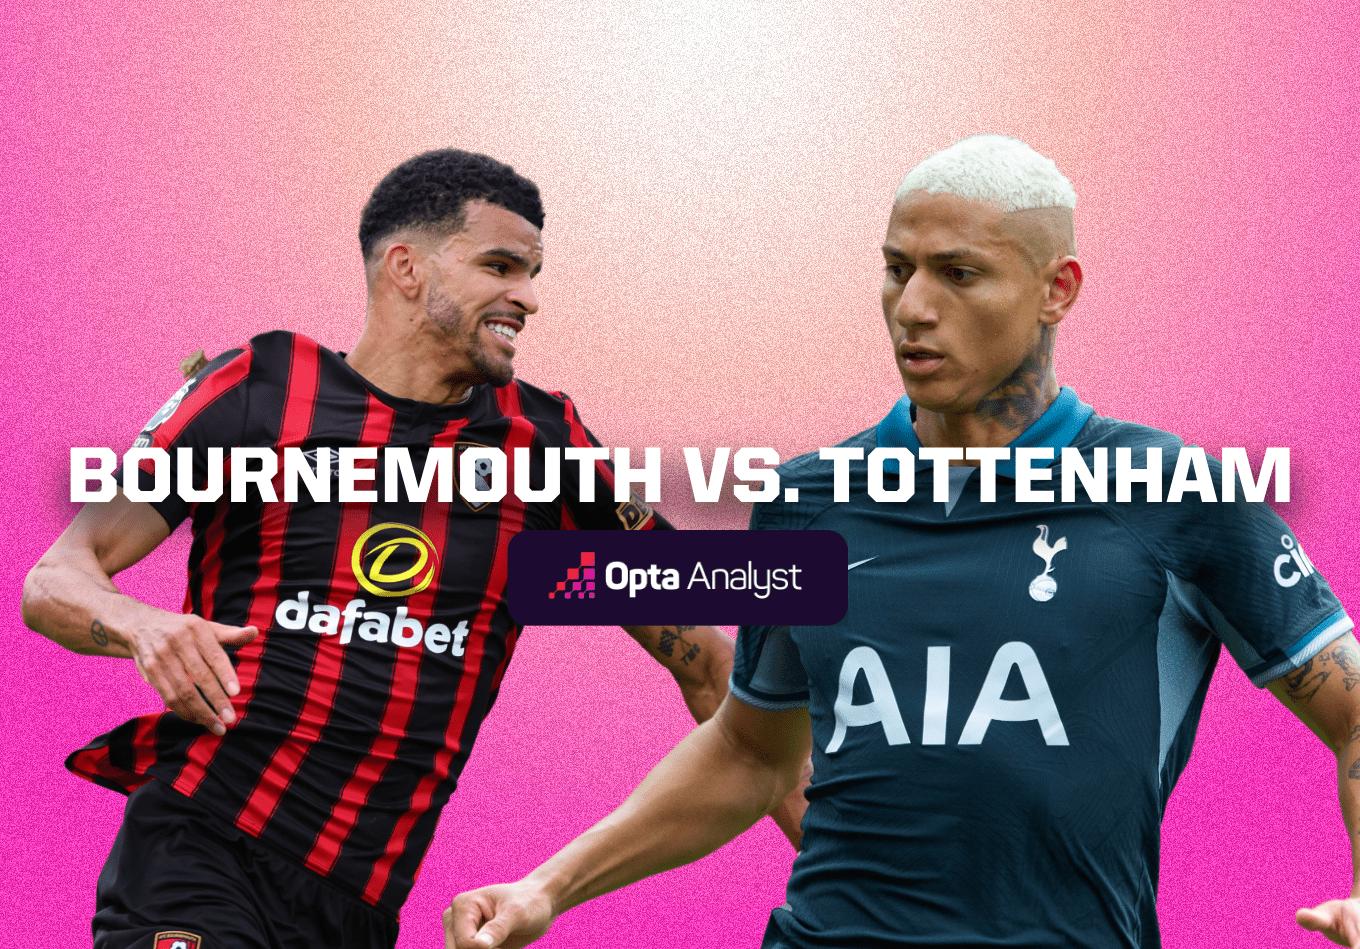 Bournemouth vs Tottenham: Prediction and Preview